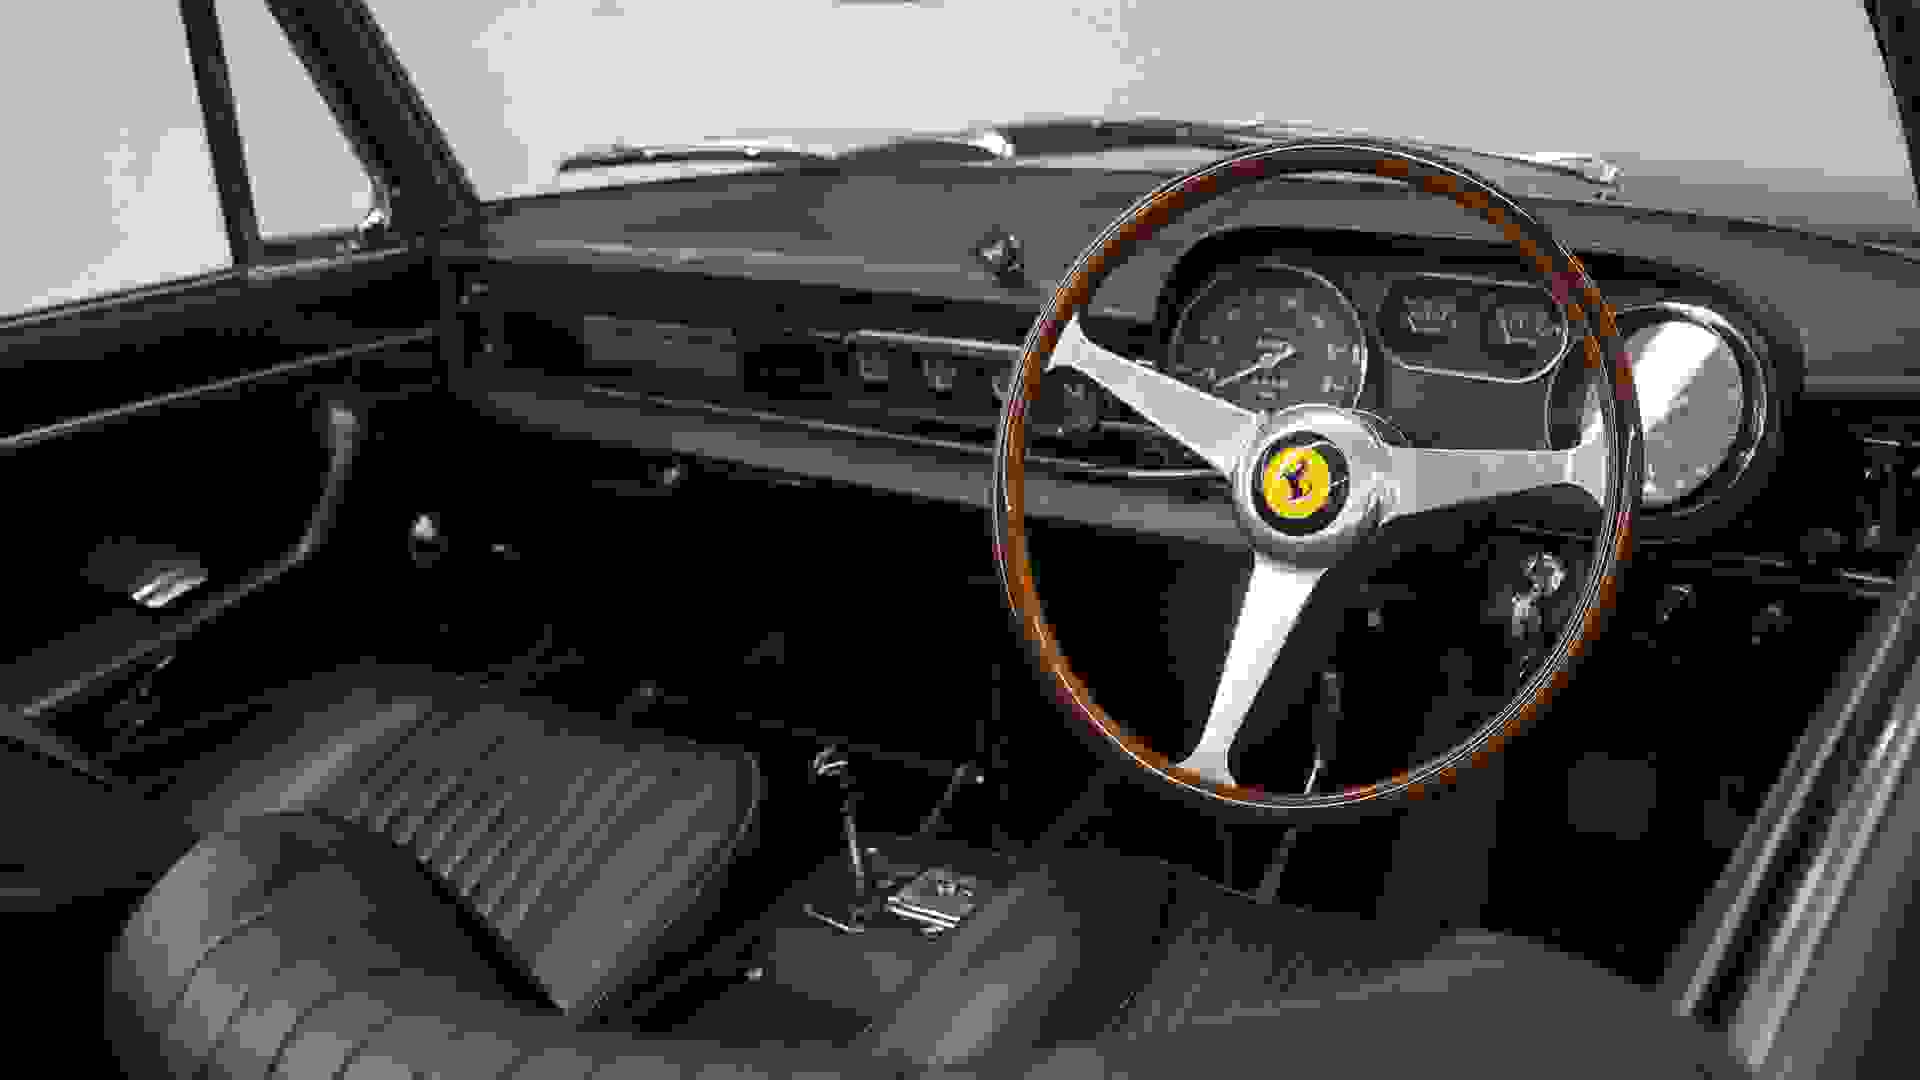 Ferrari 275 Photo d30db915-c149-4af4-8616-e4b556b4aae0.jpg